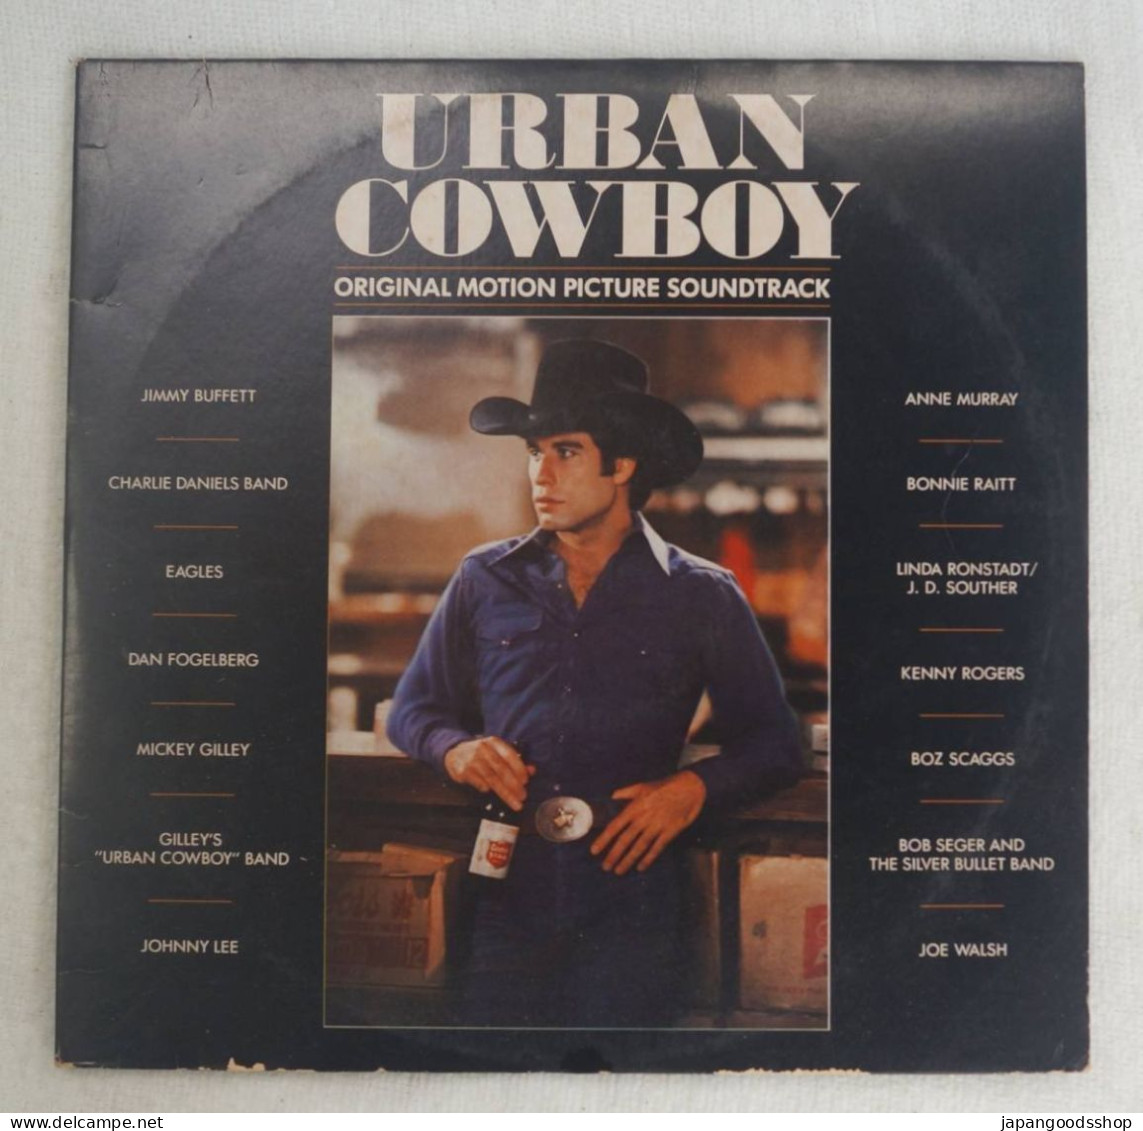 Vinyl LP : Urban Cow Boy OST ( Asylum Records DP-90002 ) - Soundtracks, Film Music